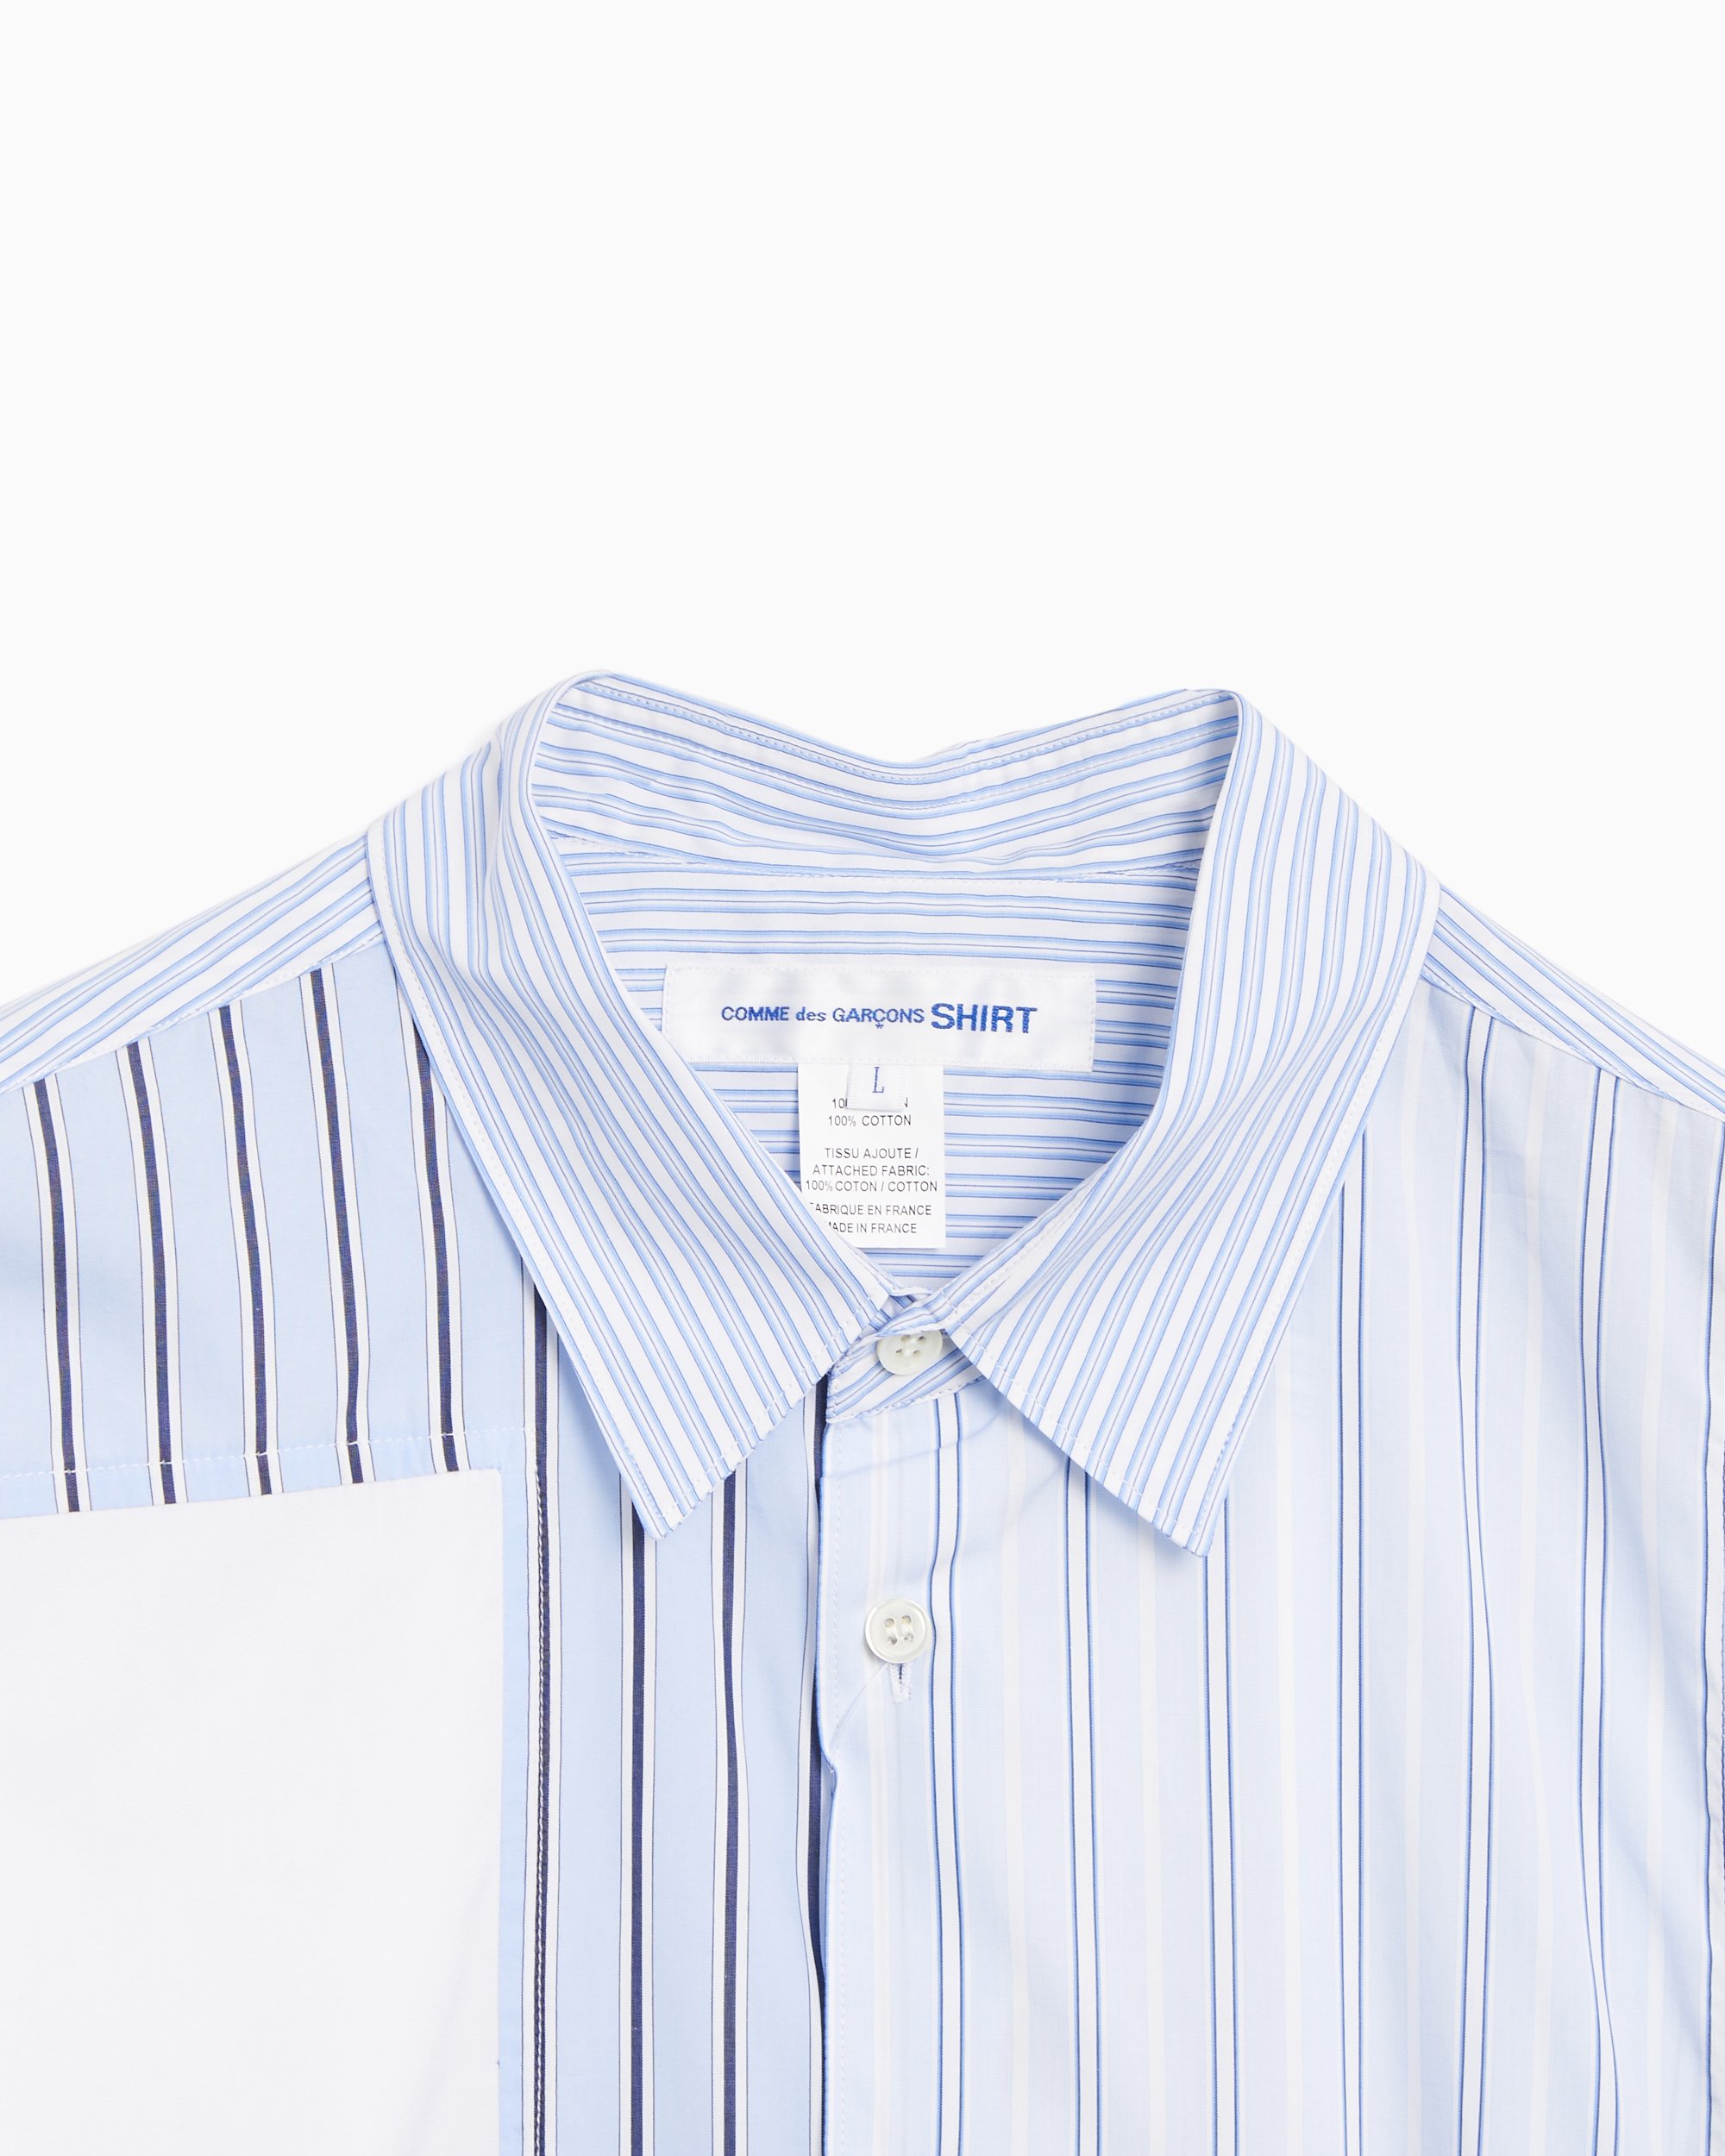 Comme Des Garçons Shirt Men's Cotton Stripe Poplin Shirt Blue 